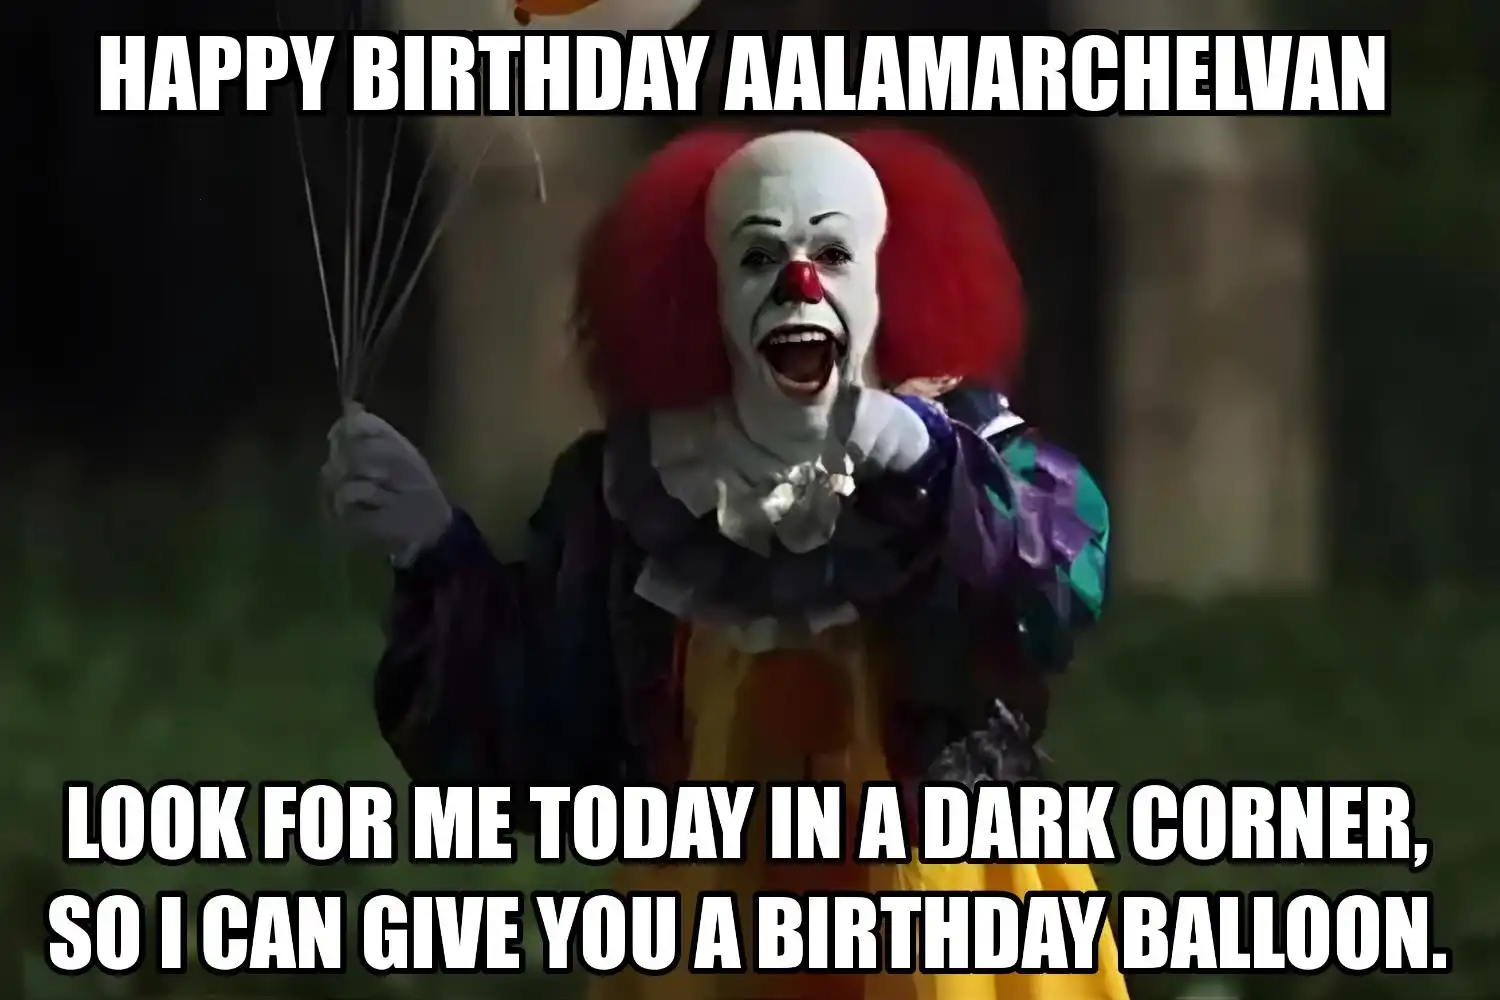 Happy Birthday Aalamarchelvan I Can Give You A Balloon Meme